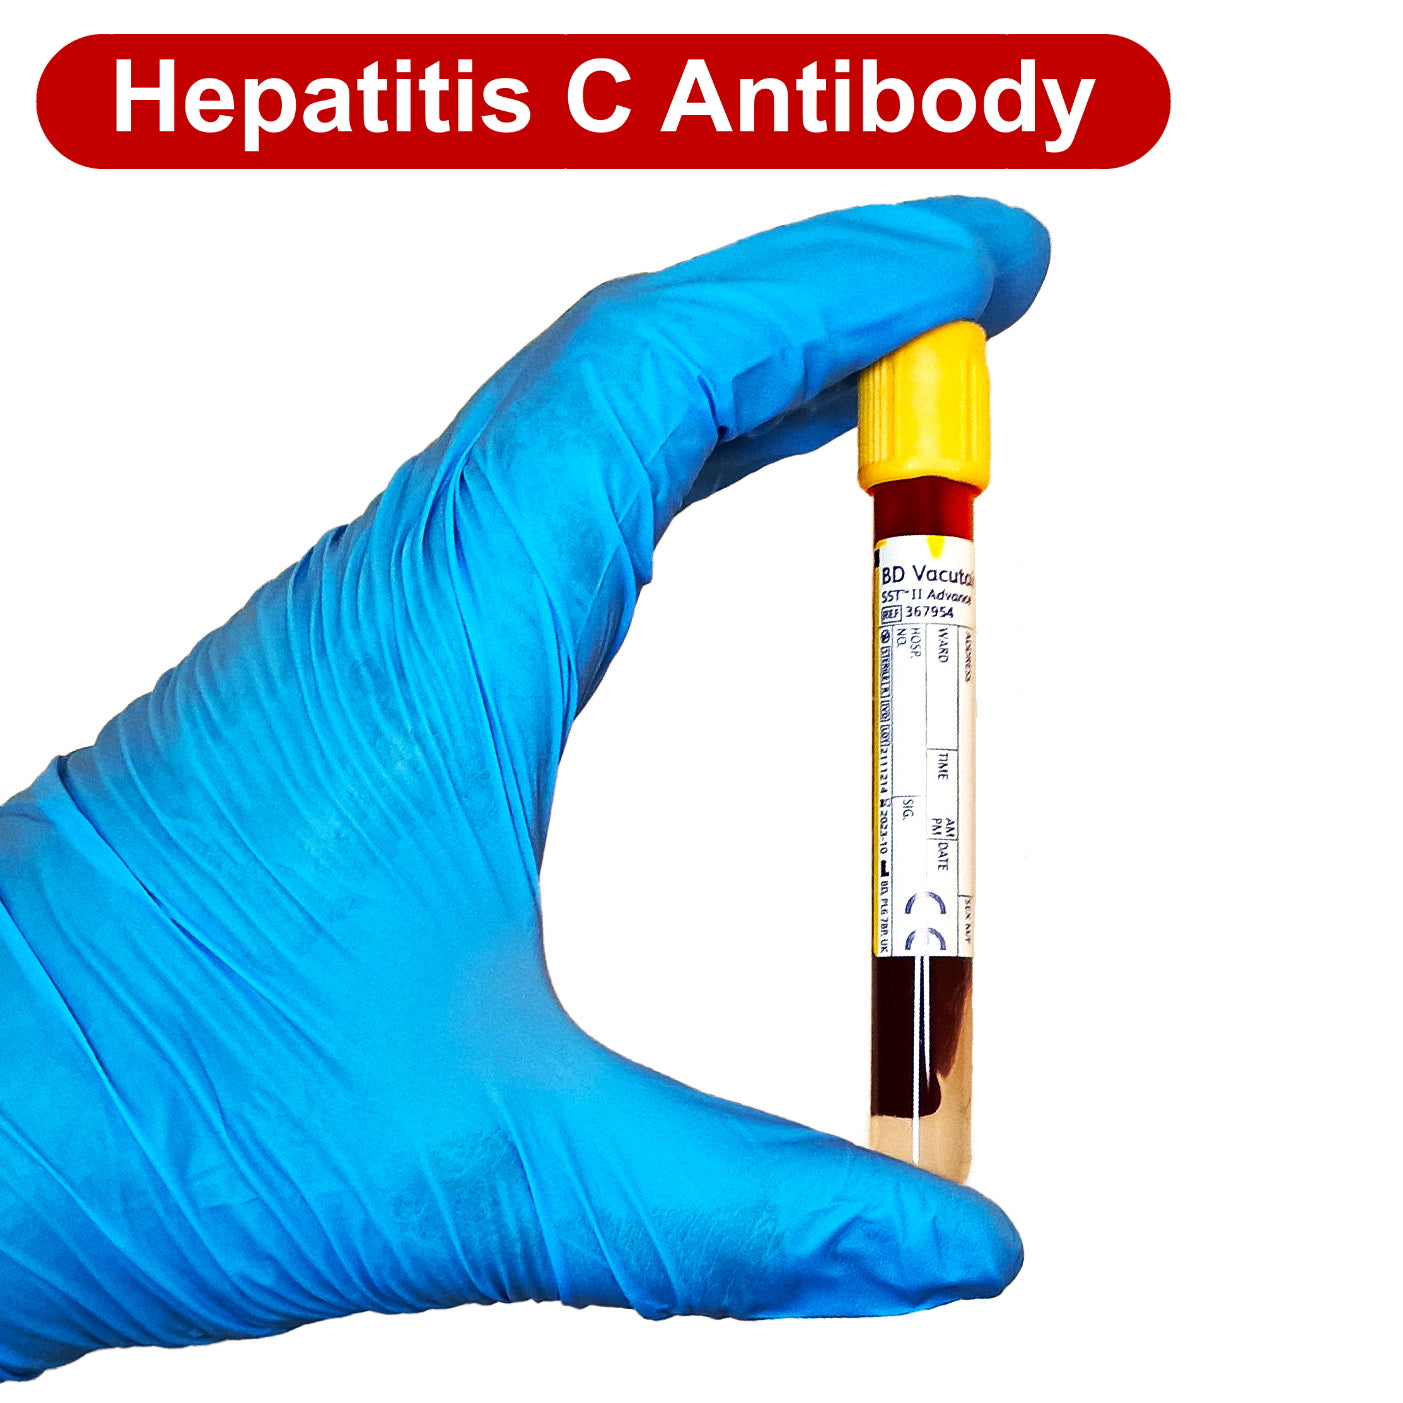 Hepatitis C Antibody Blood Test